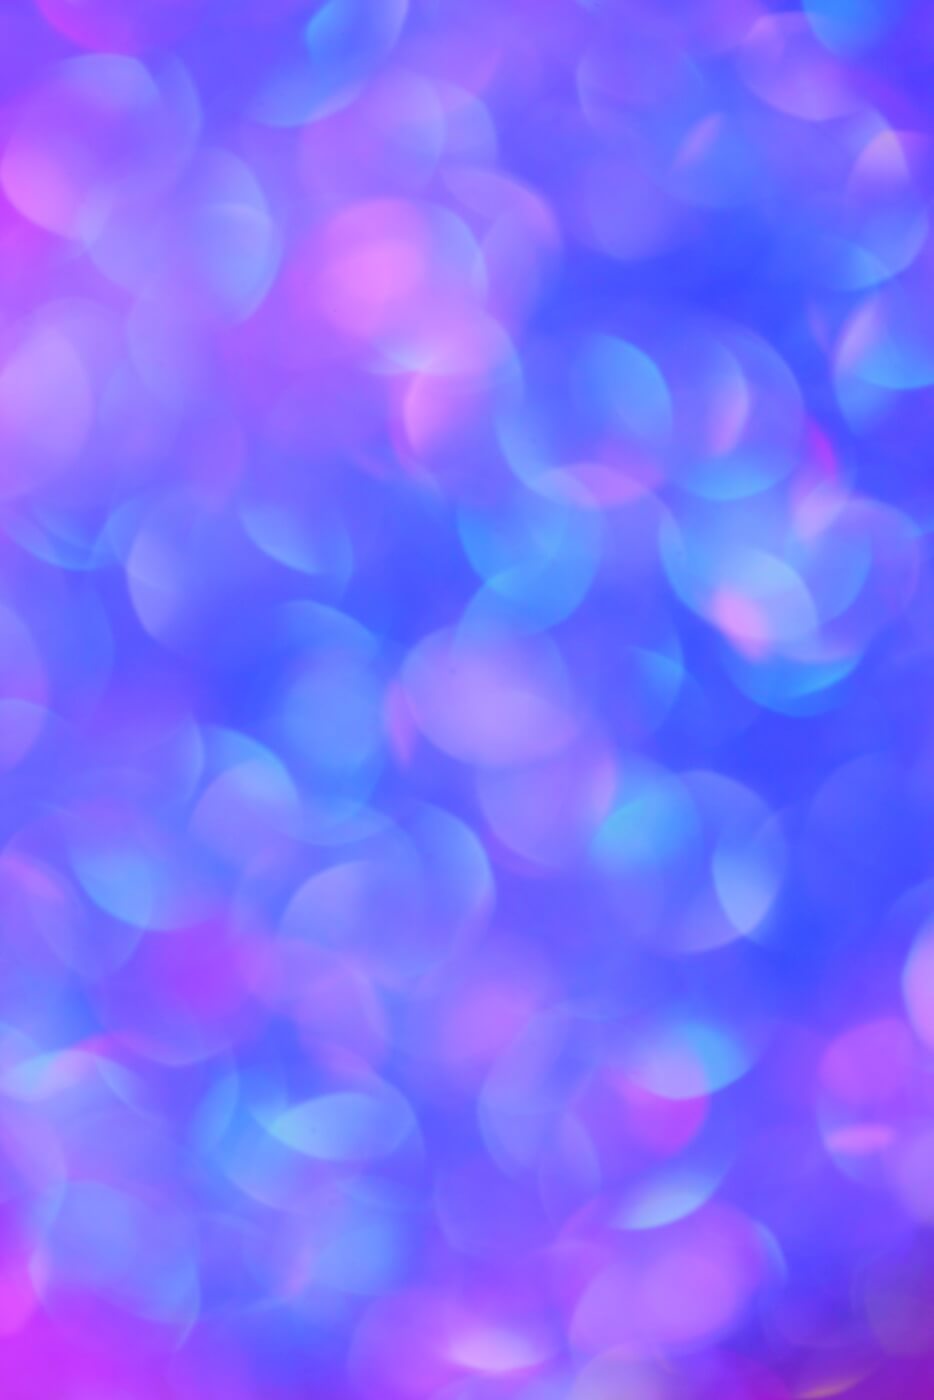 blue and purple shuny background